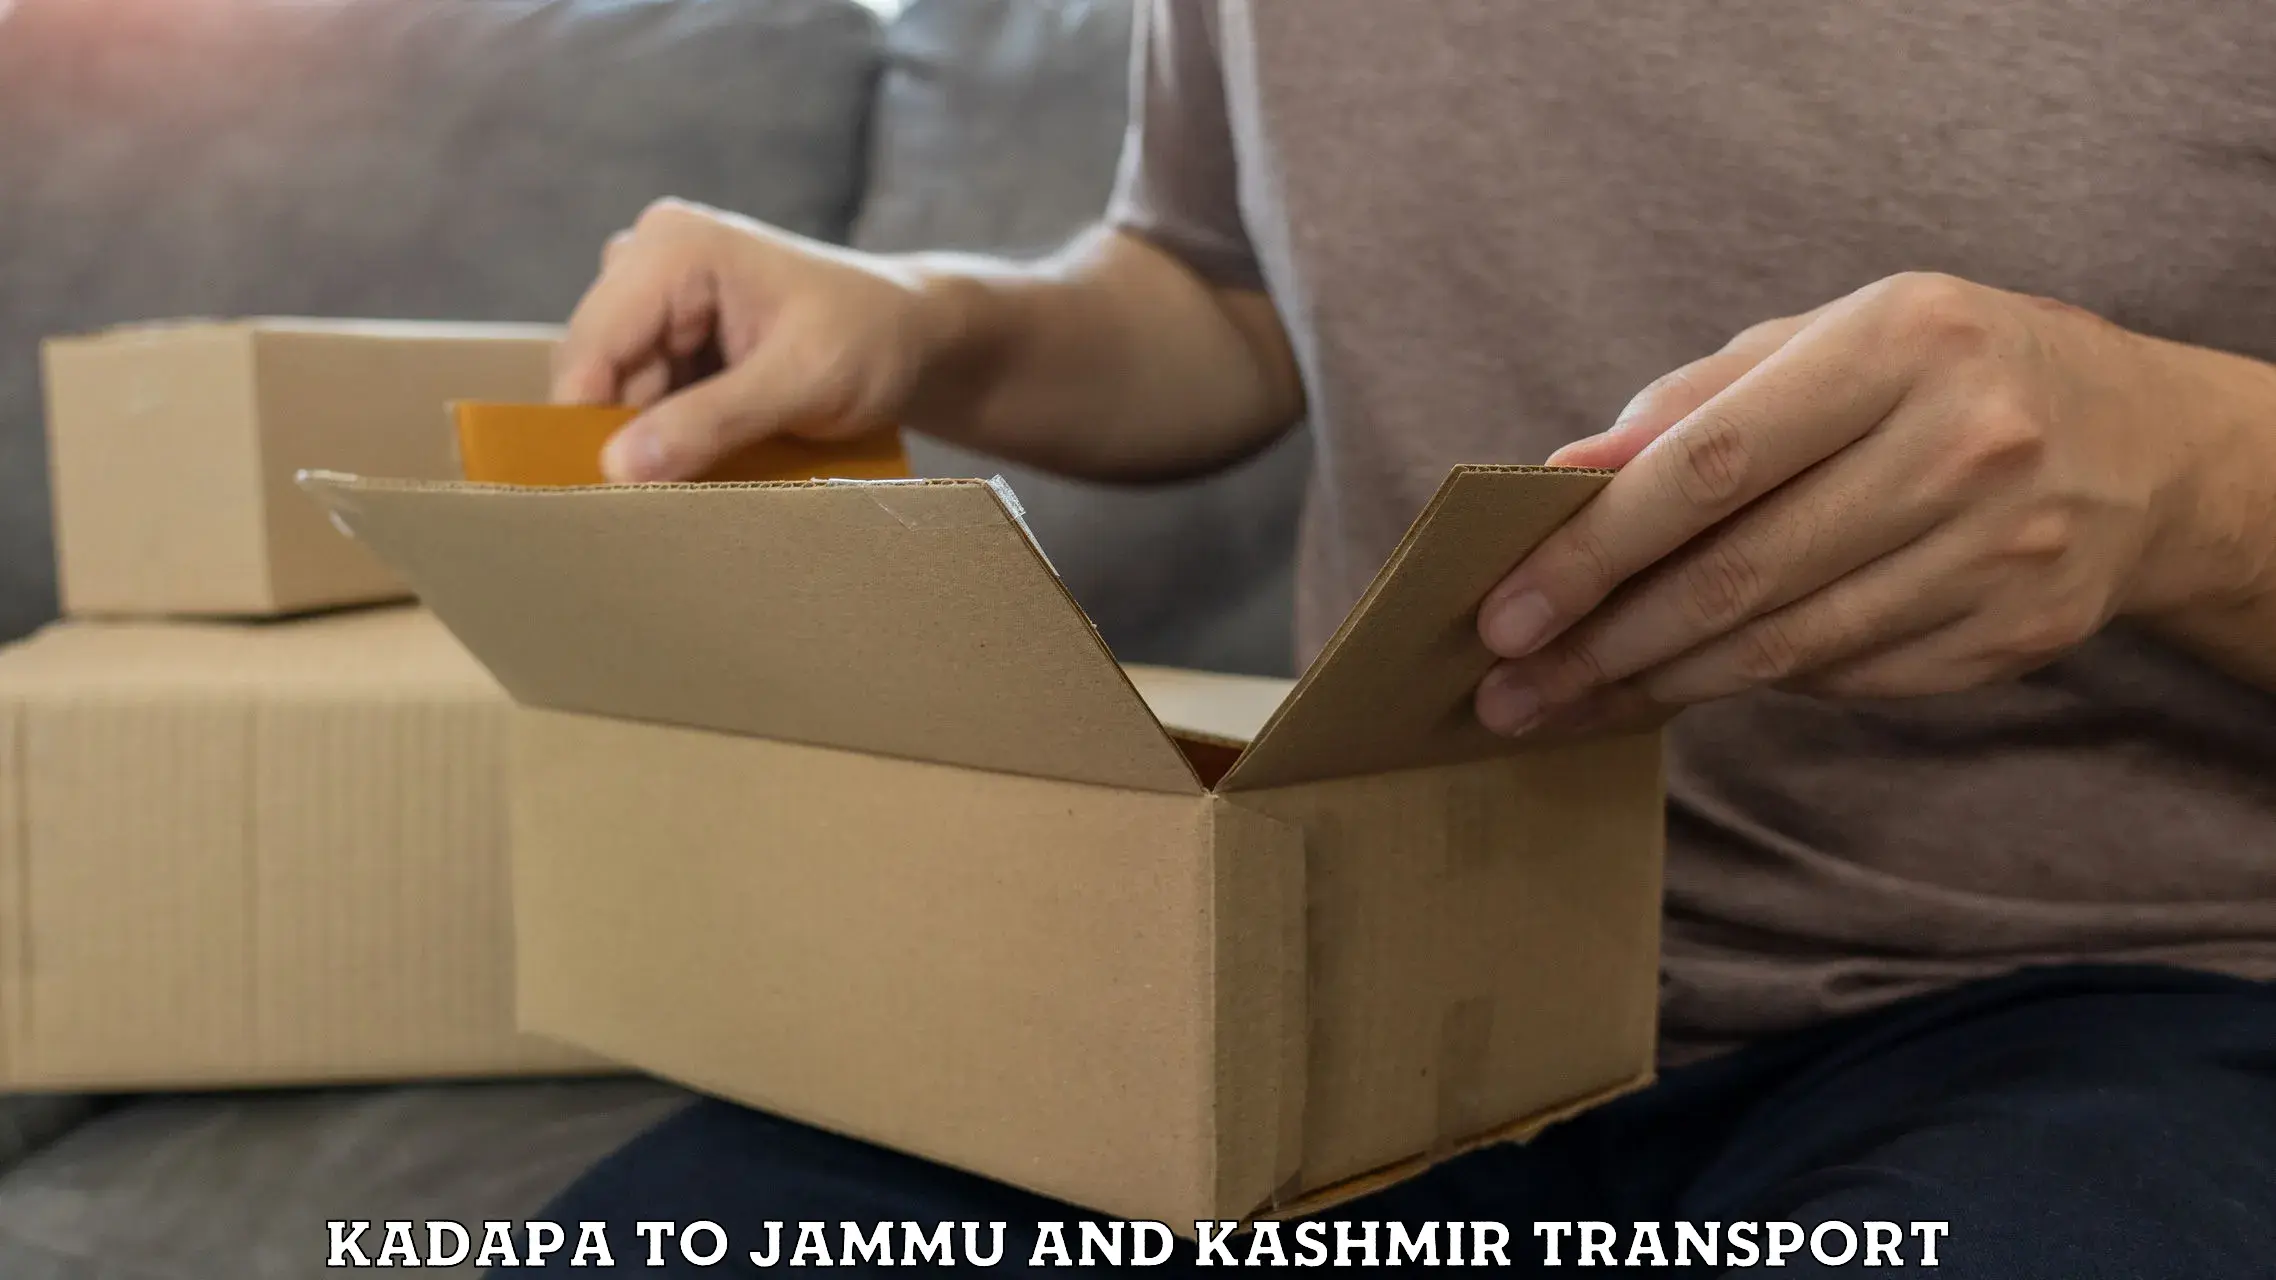 Truck transport companies in India Kadapa to Jammu and Kashmir